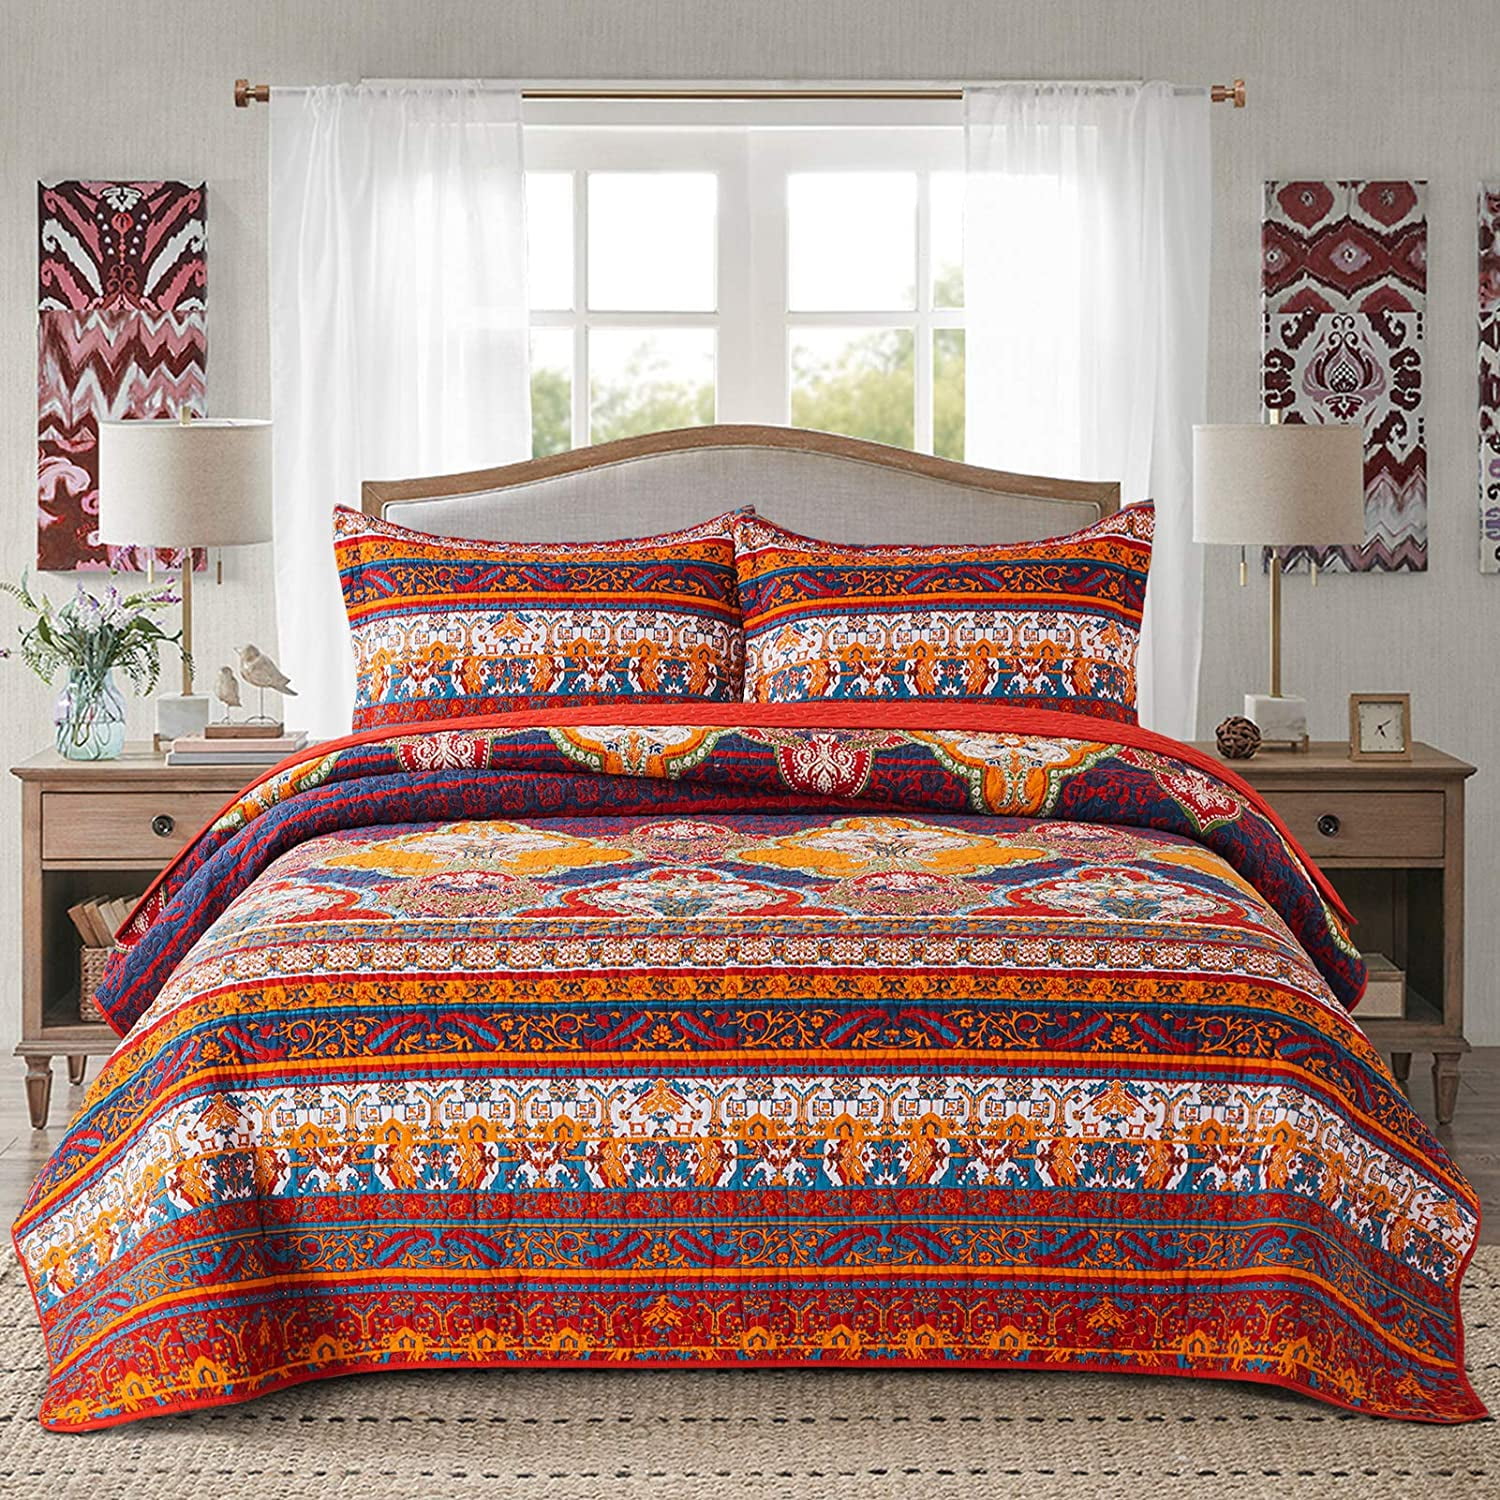 NEWLAKE Cotton Bedspread Queen Quilt Sets Reversible Patchwork